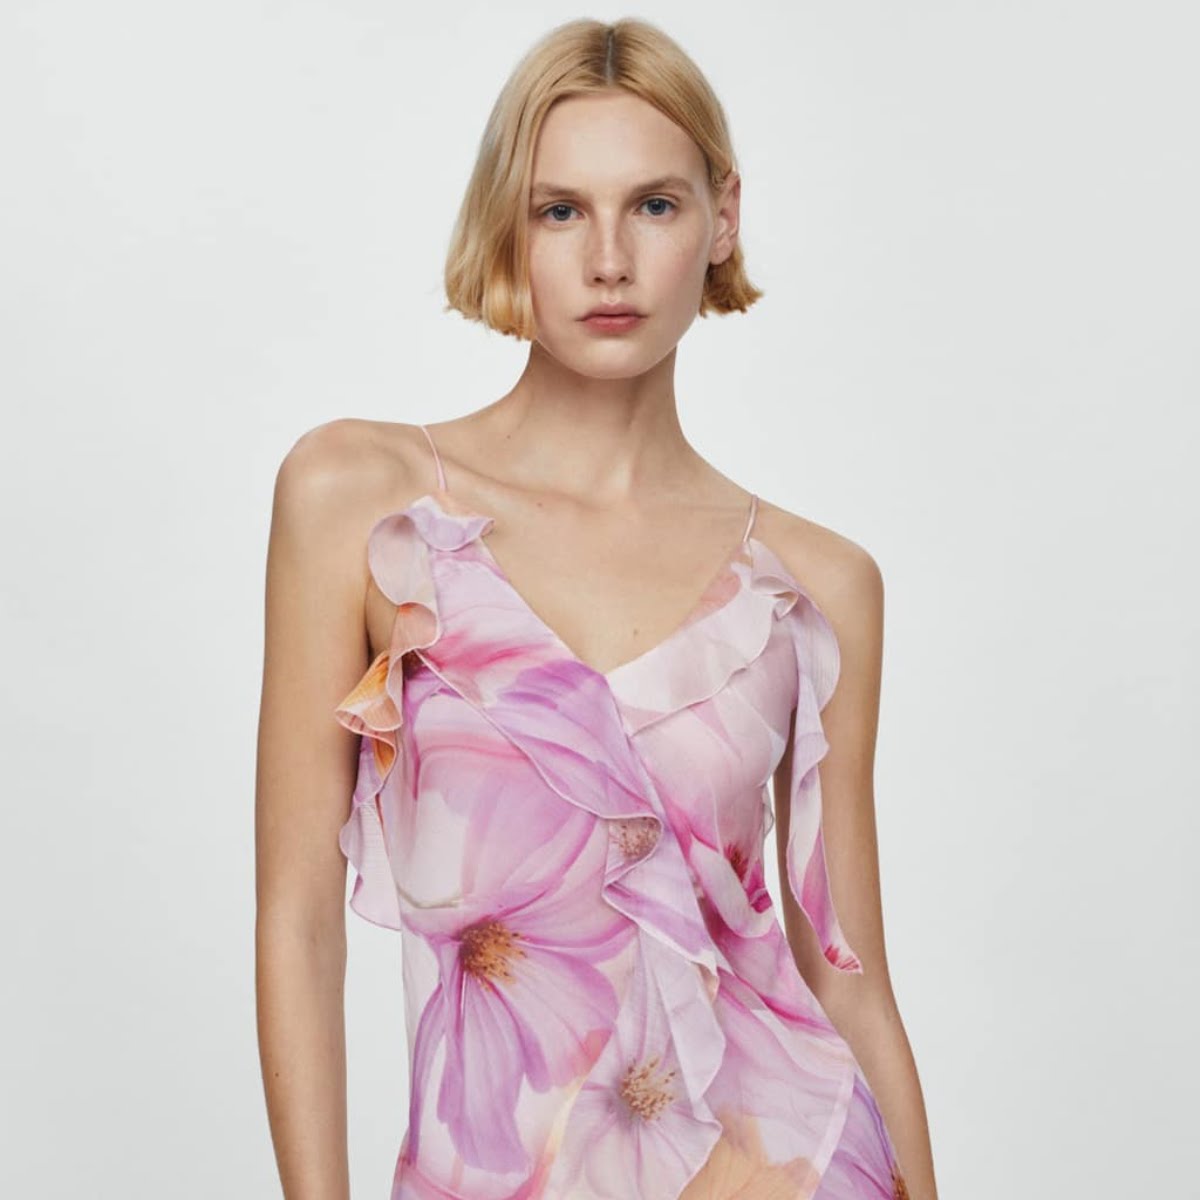 Ruffled Floral Print Dress, €79.99, Mango